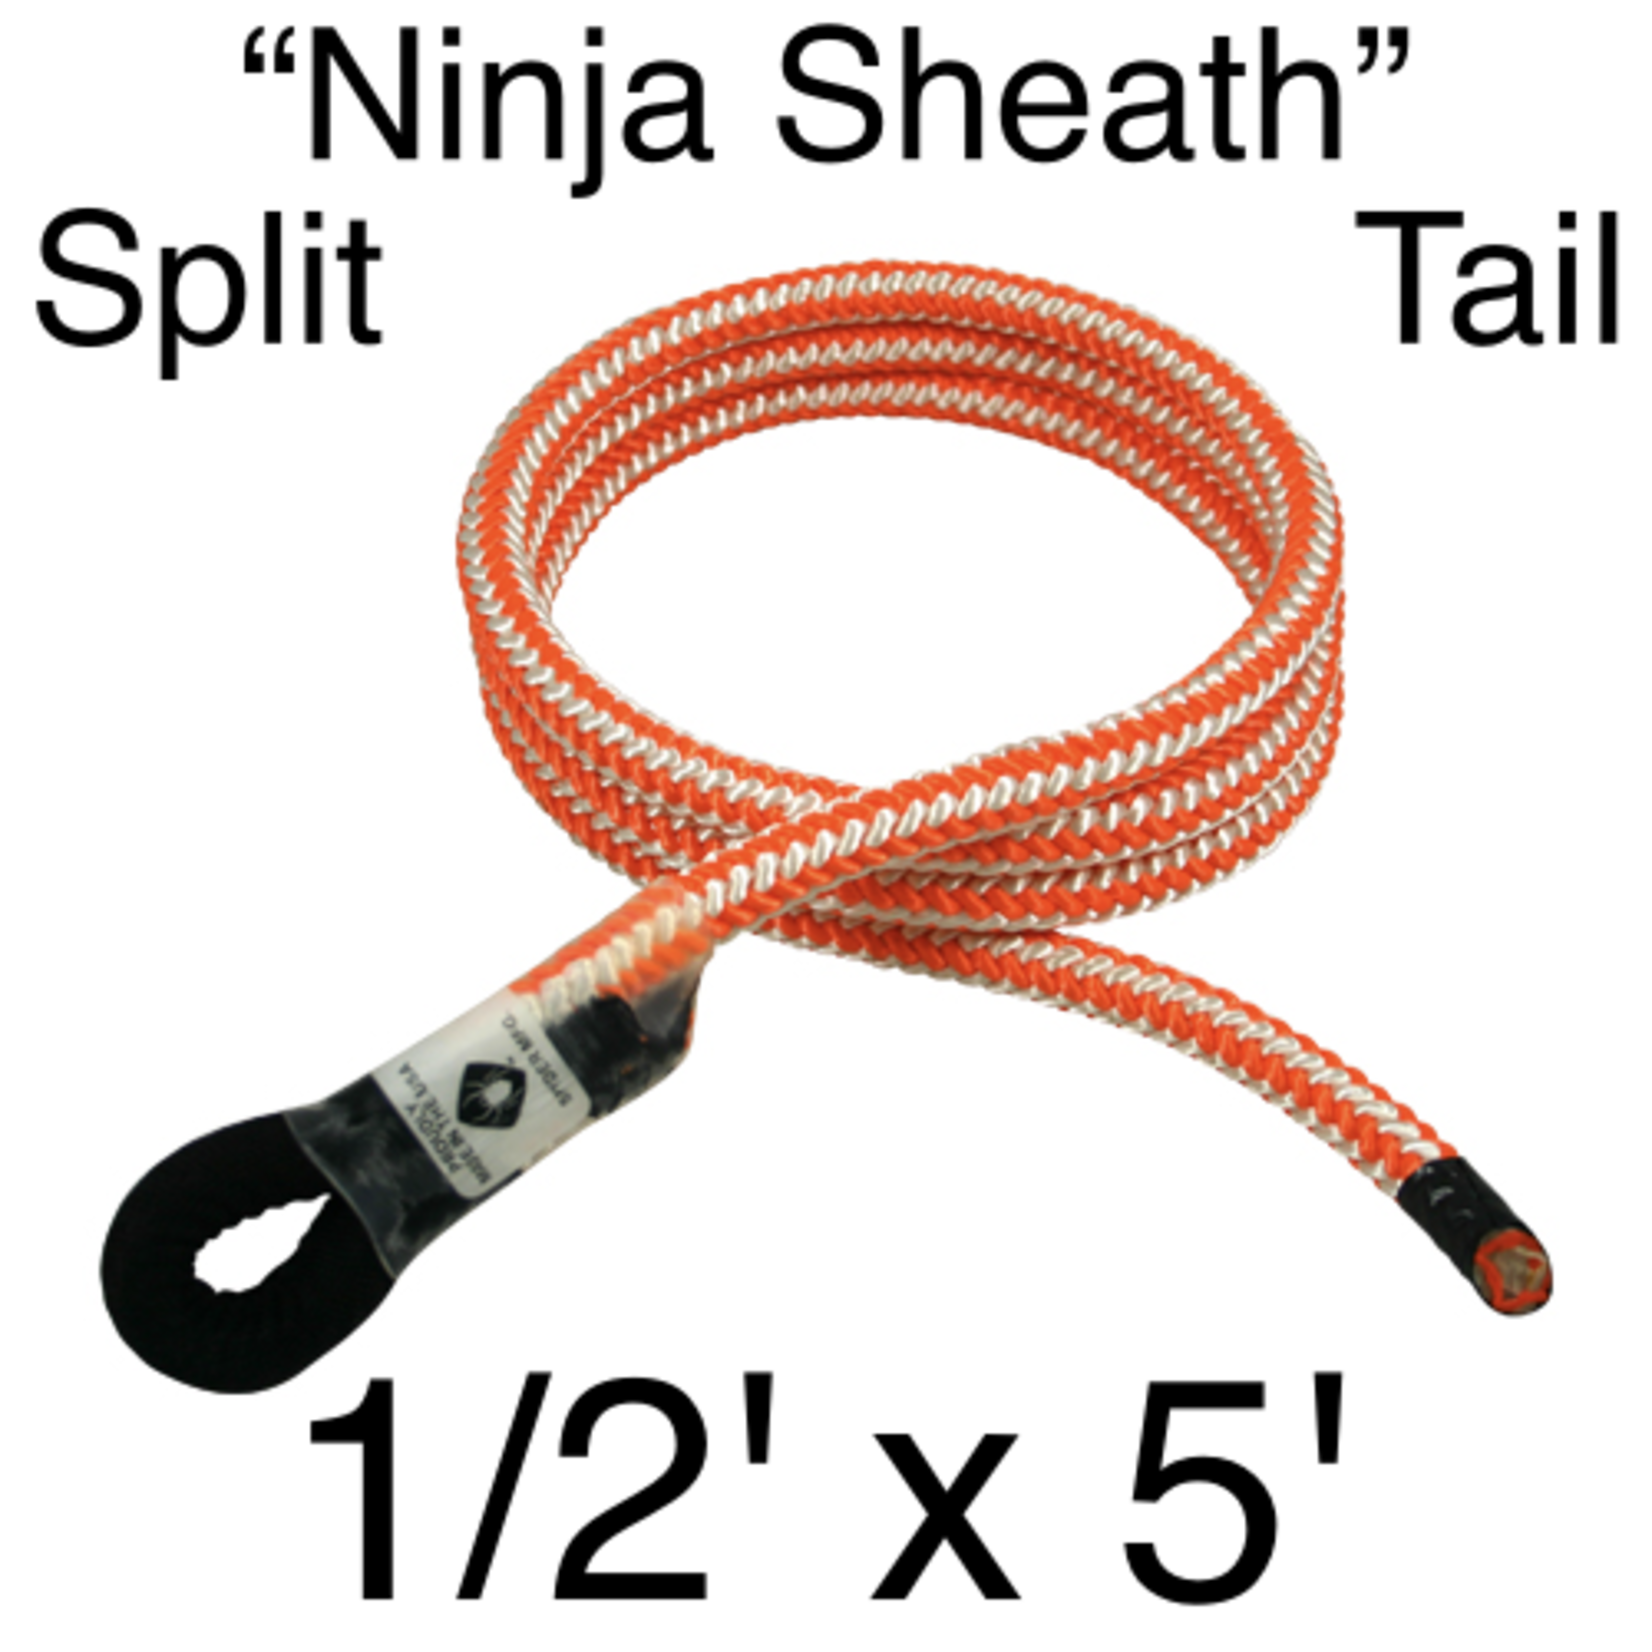 Spyder Manufacturing Split Tail "Ninja Sheath" 1/2" x 5' (60) Orange & White